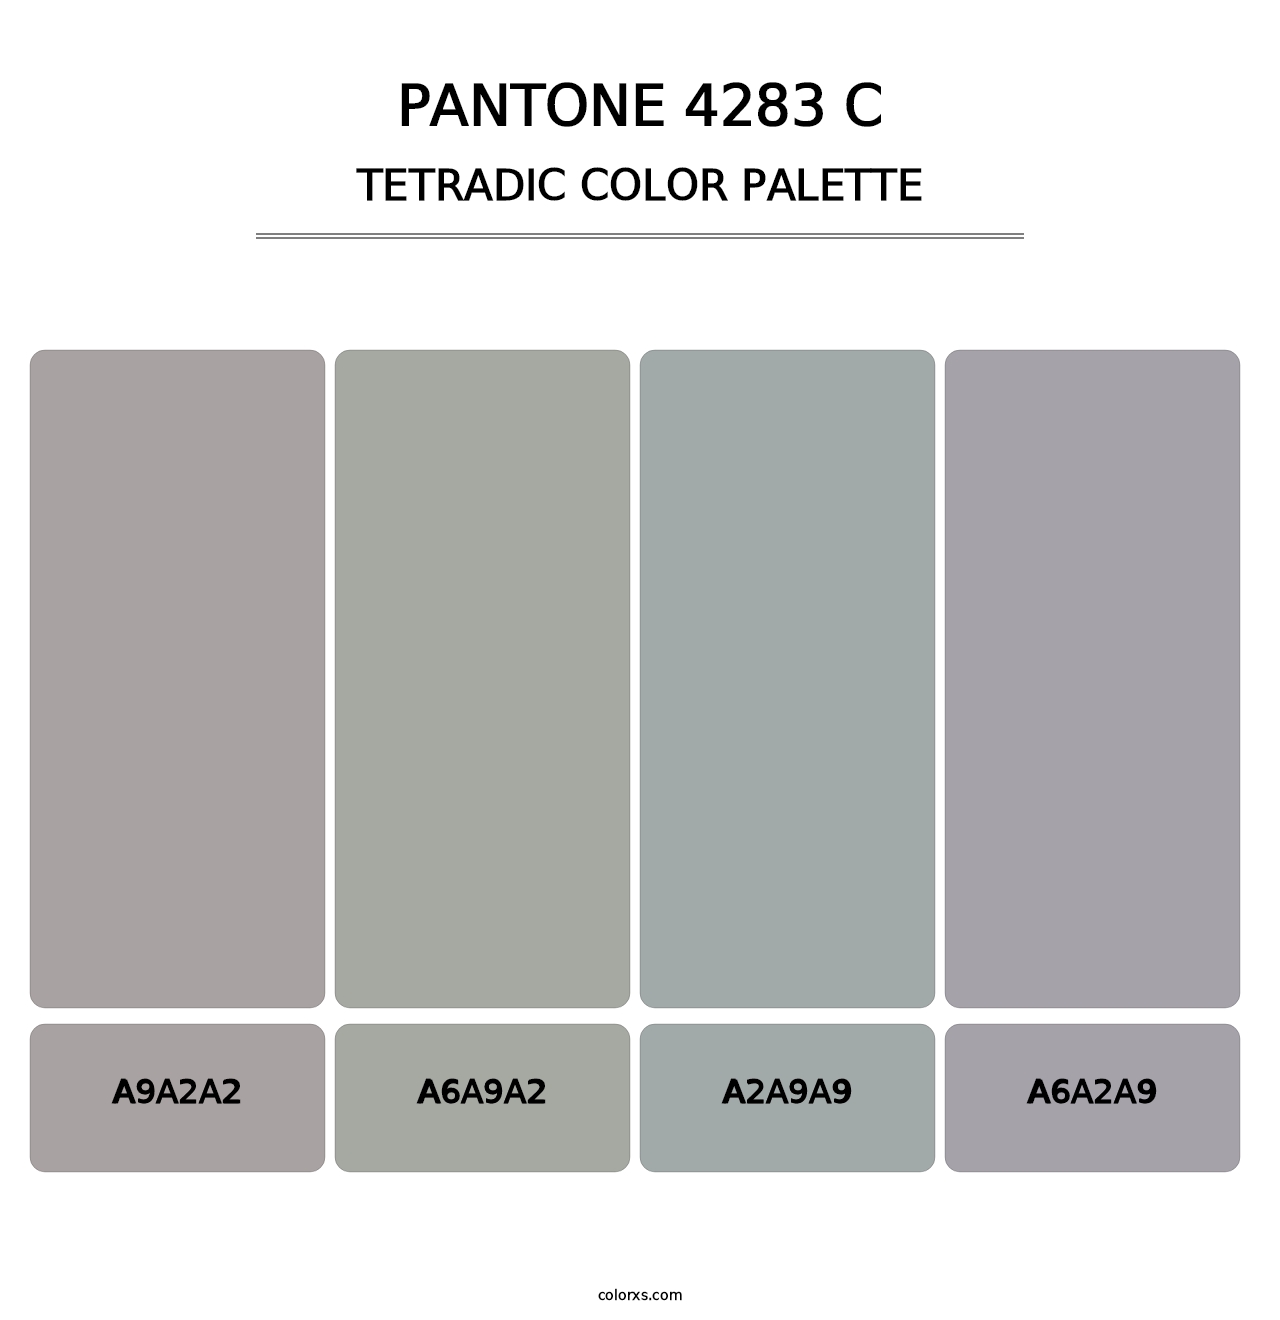 PANTONE 4283 C - Tetradic Color Palette